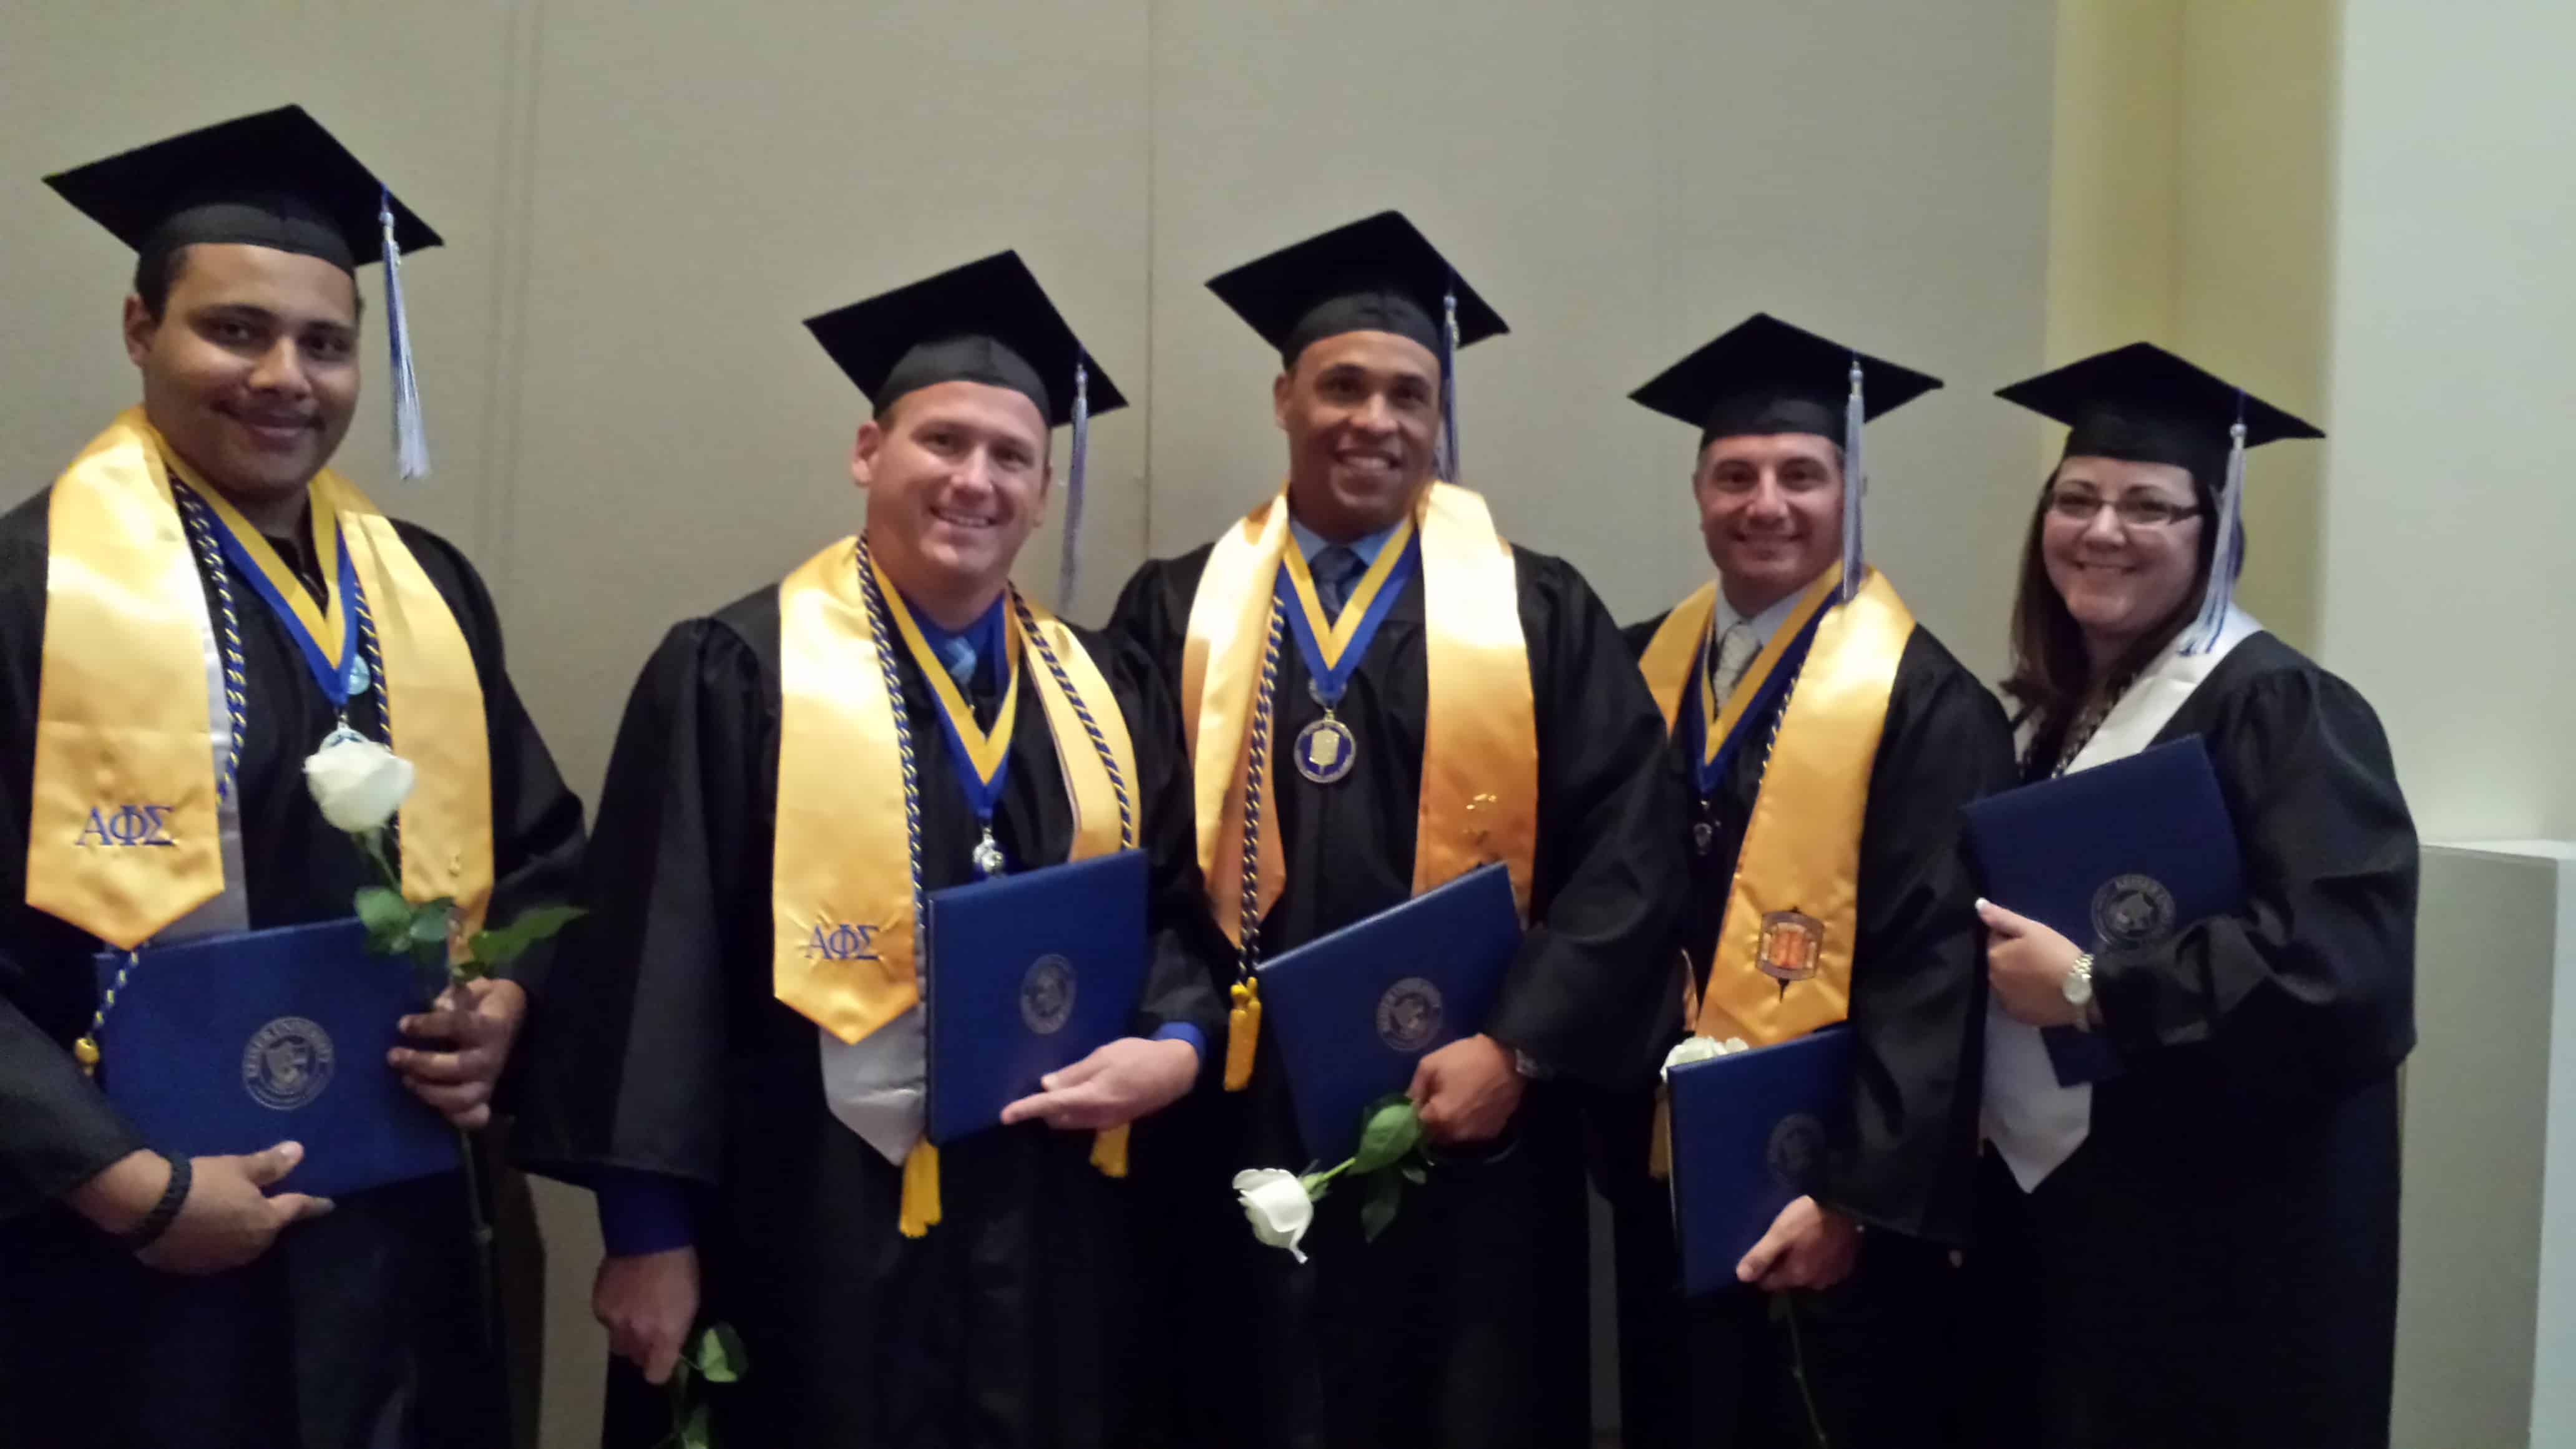 “Law & Order” Online Graduates Walk at Daytona’s Graduation Ceremony